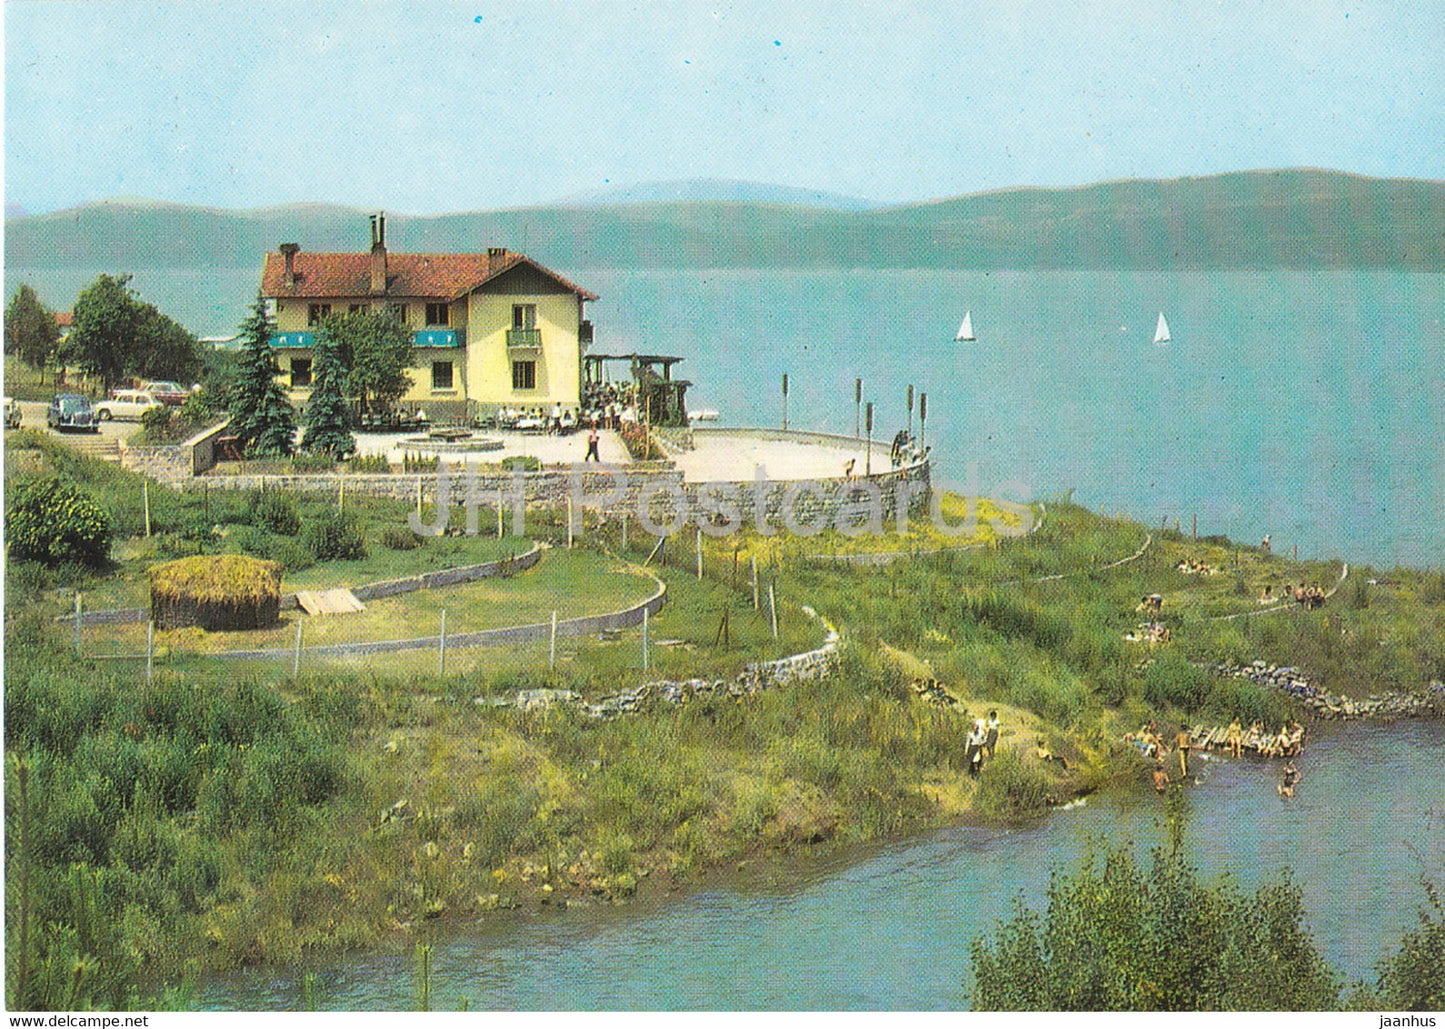 Sofia - Shtarkelovo Gnezdo restaurant - 1973 - Bulgaria - unused - JH Postcards